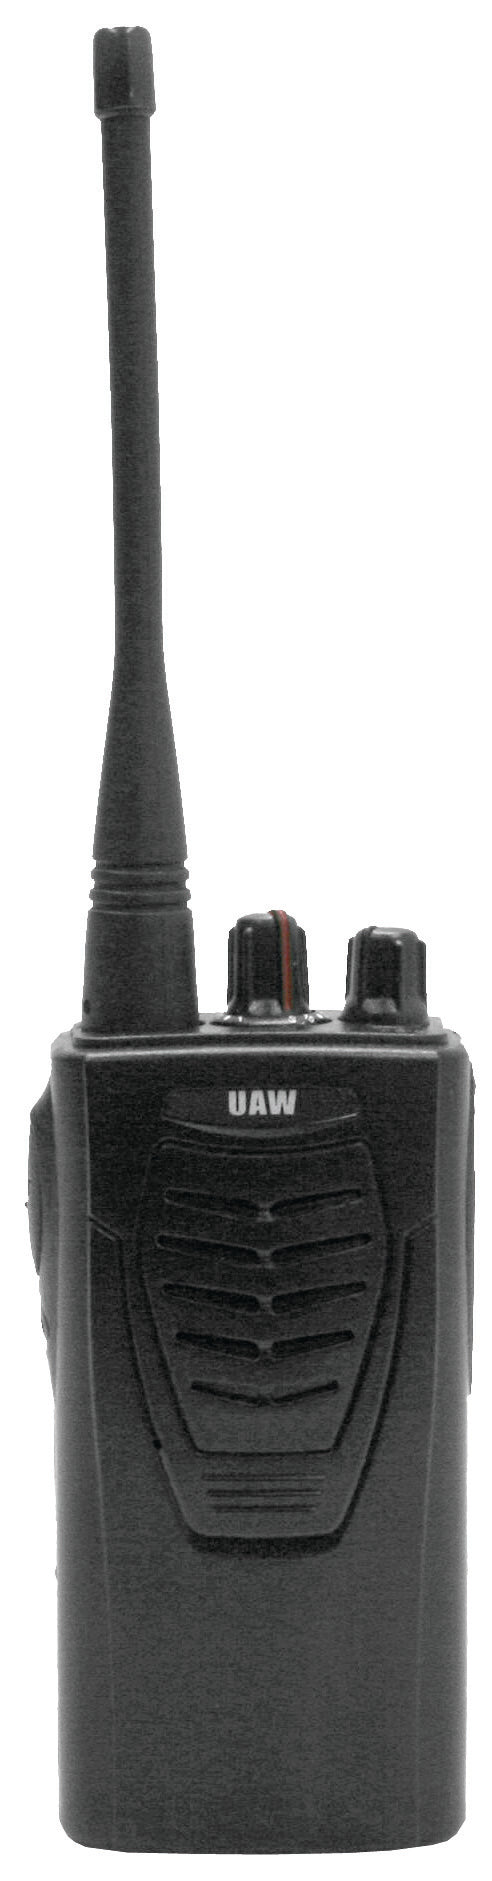 UA301 Compact Programmable VHF Radio